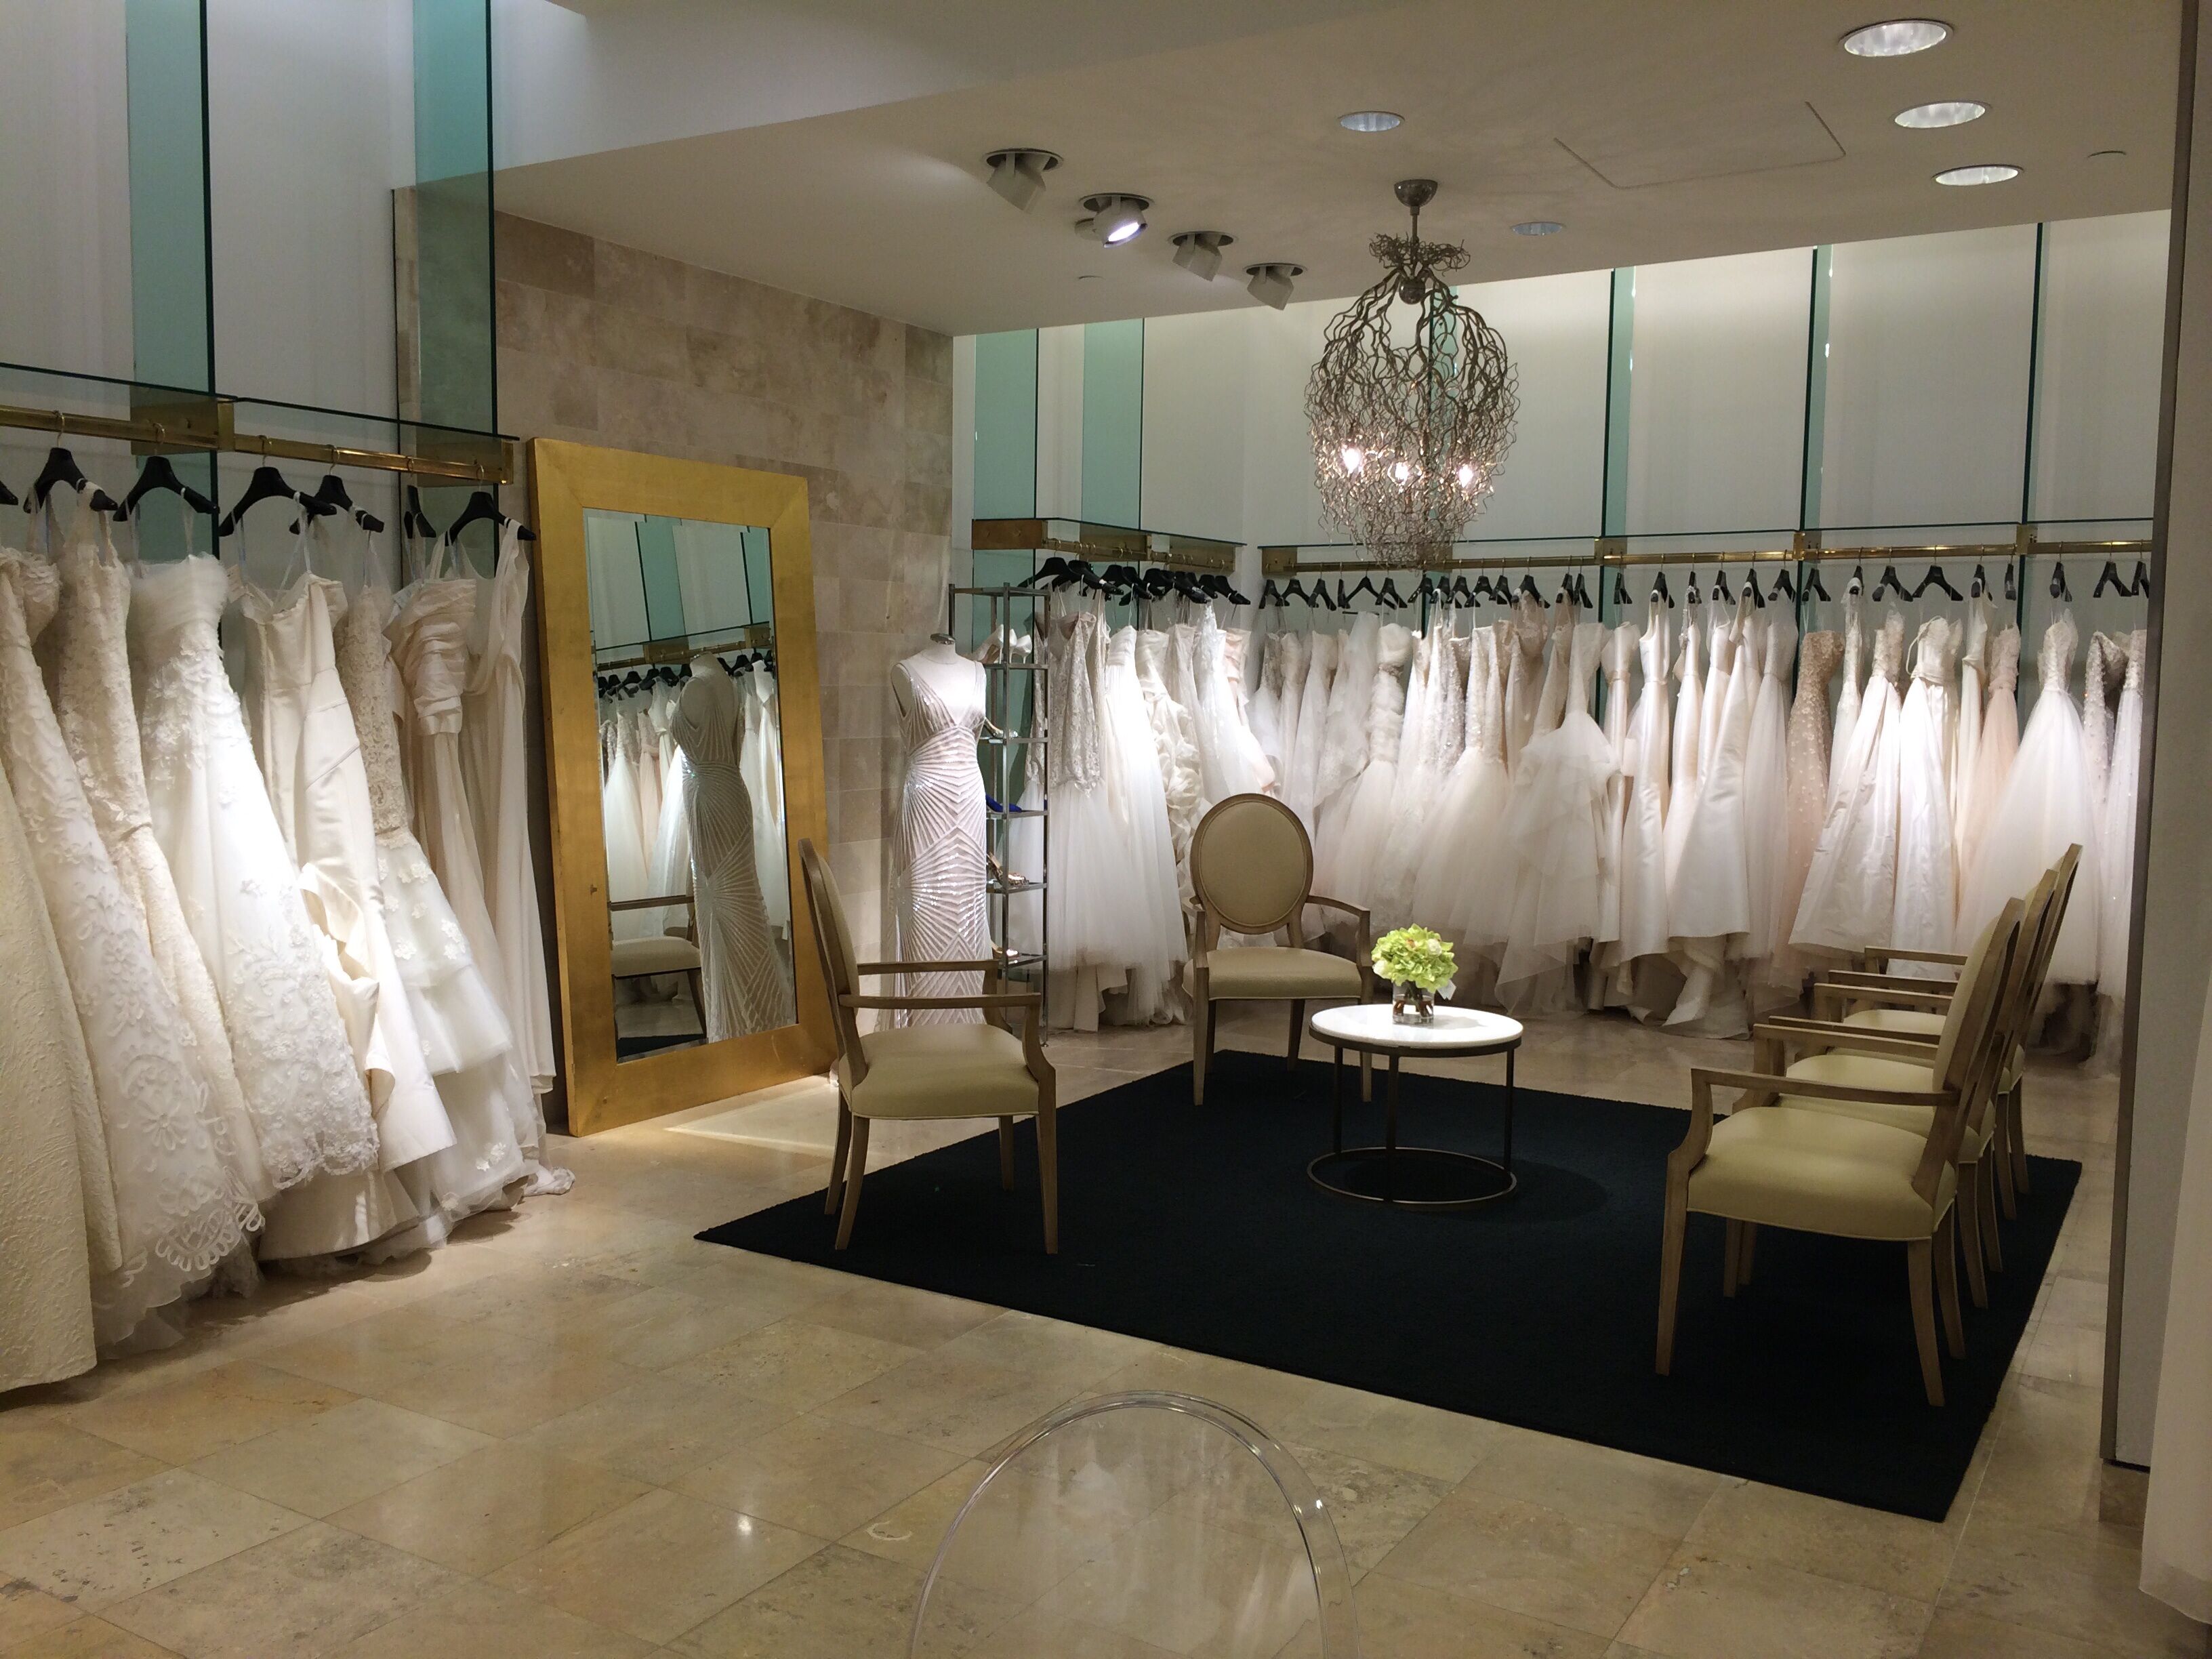 Neiman Marcus | Bridal Salons ...